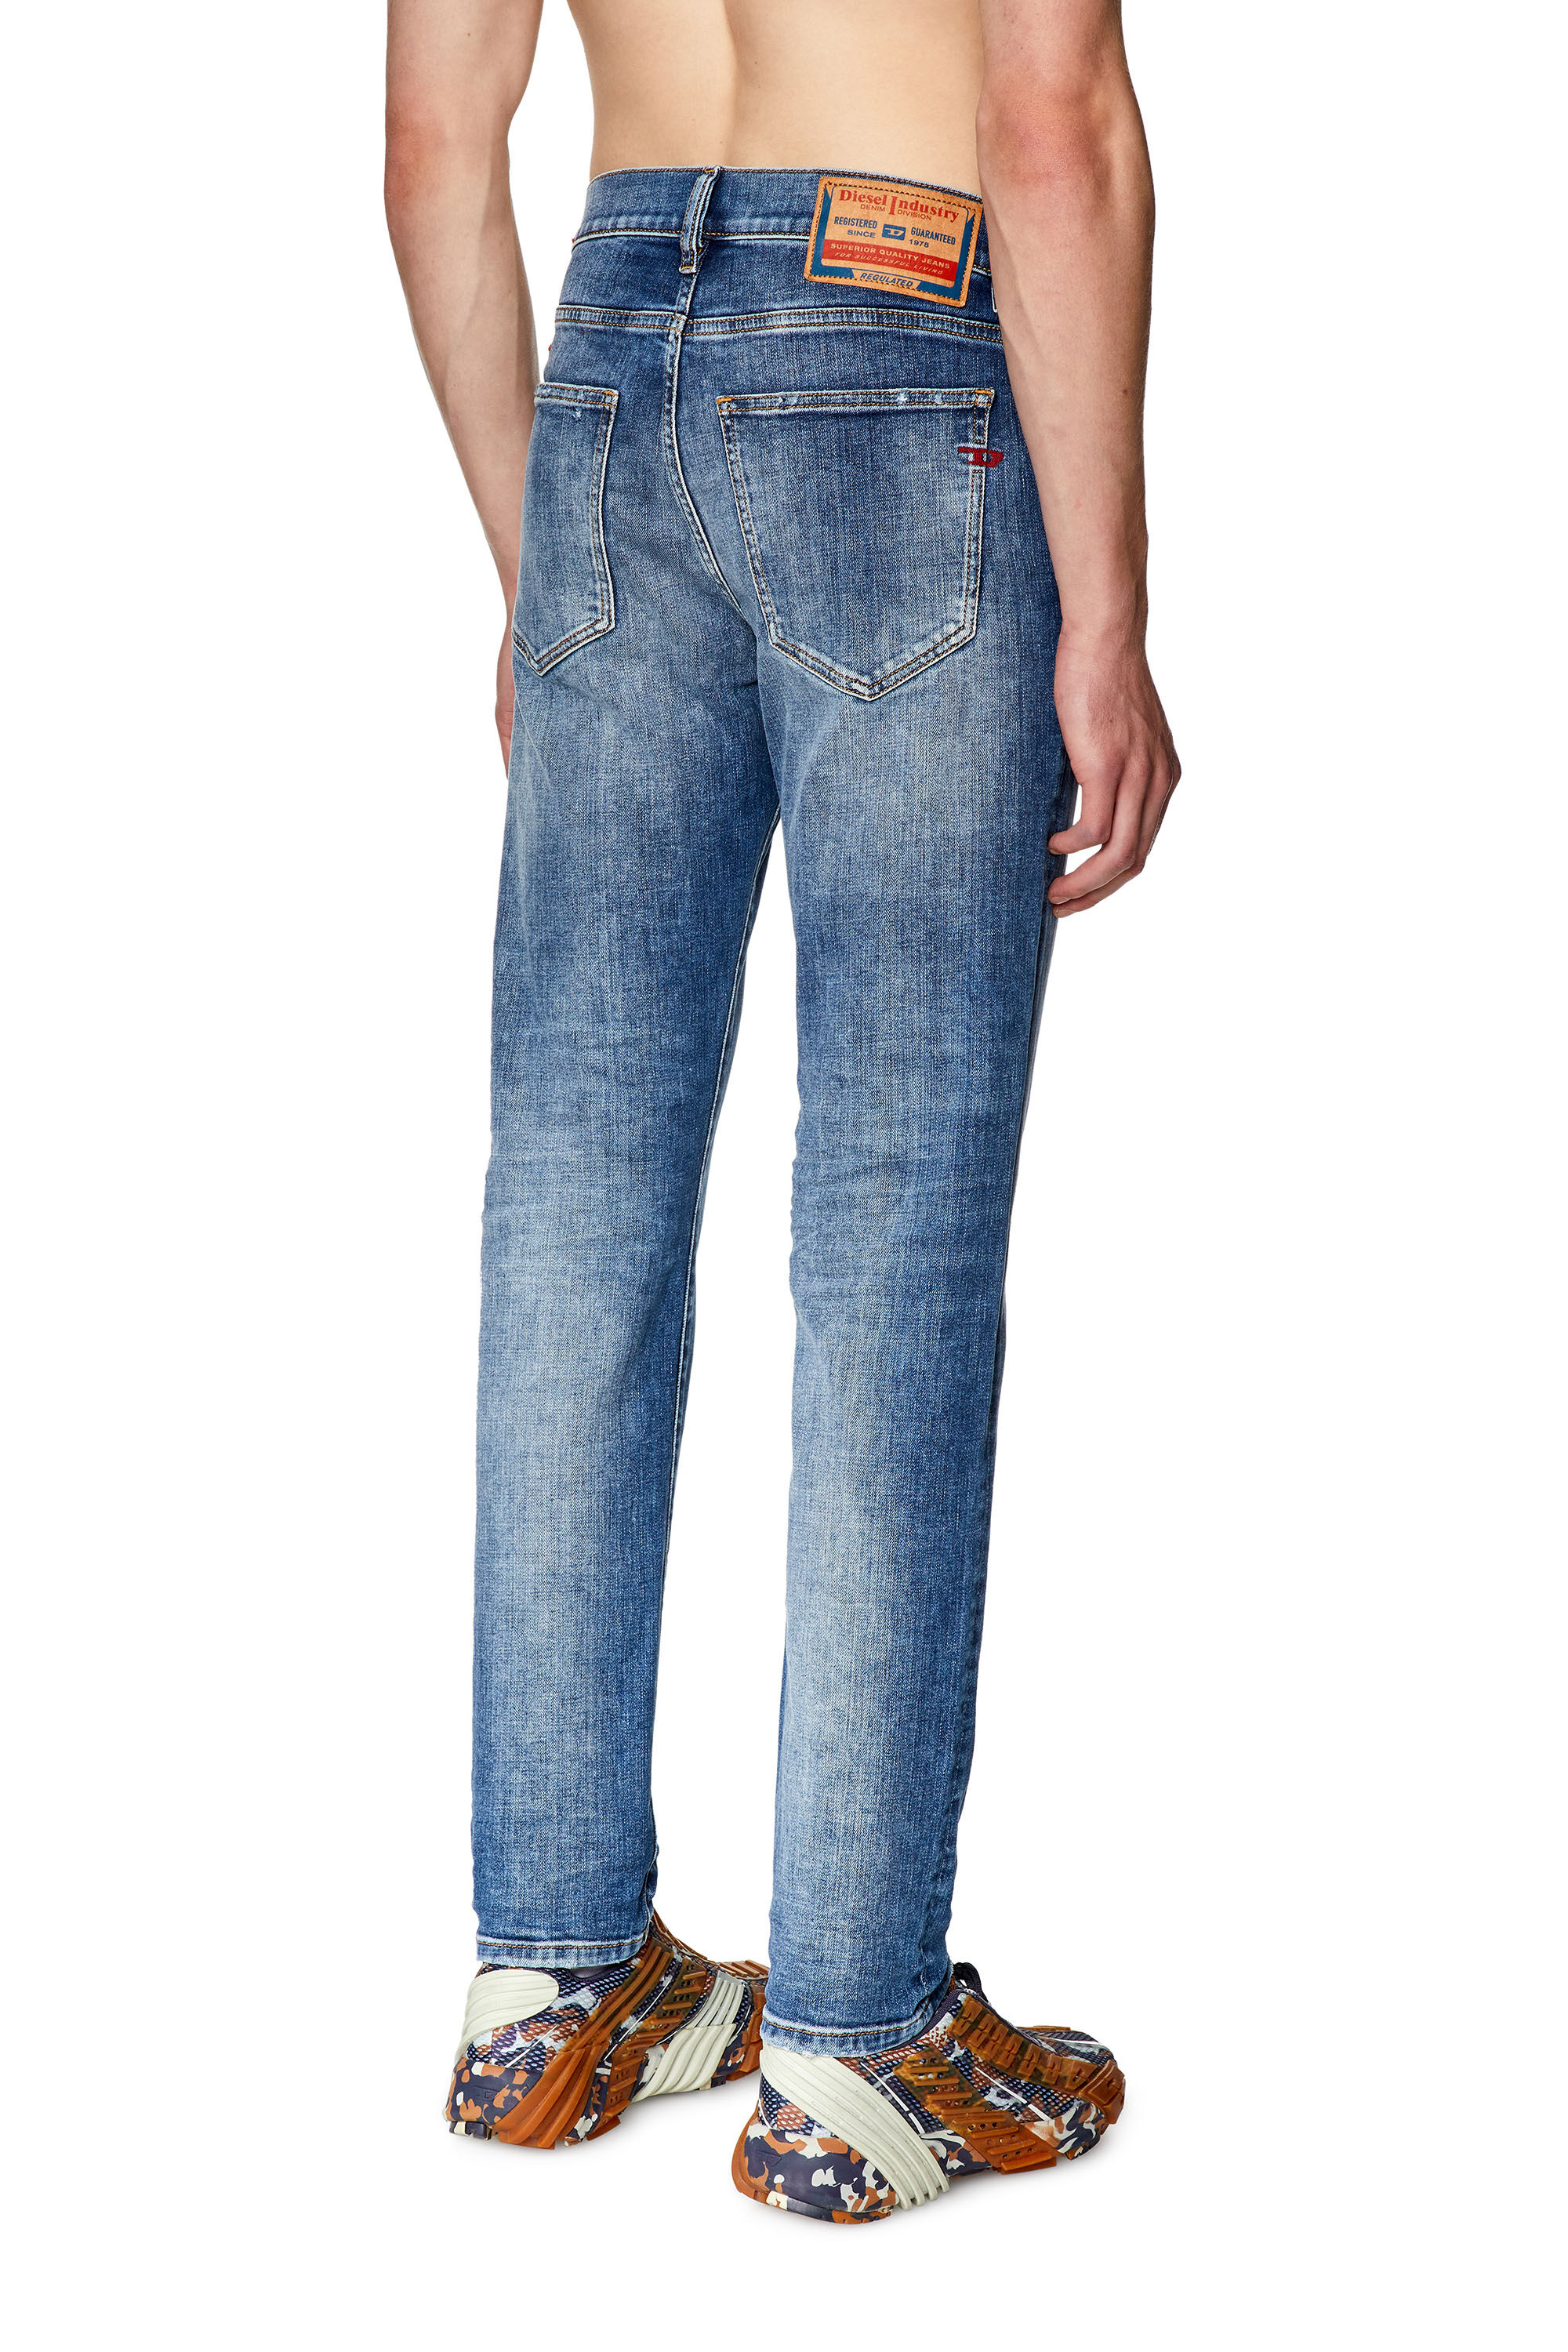 DSQUARED JEANS - Google'da Ara  Mens jeans pockets, Denim jeans